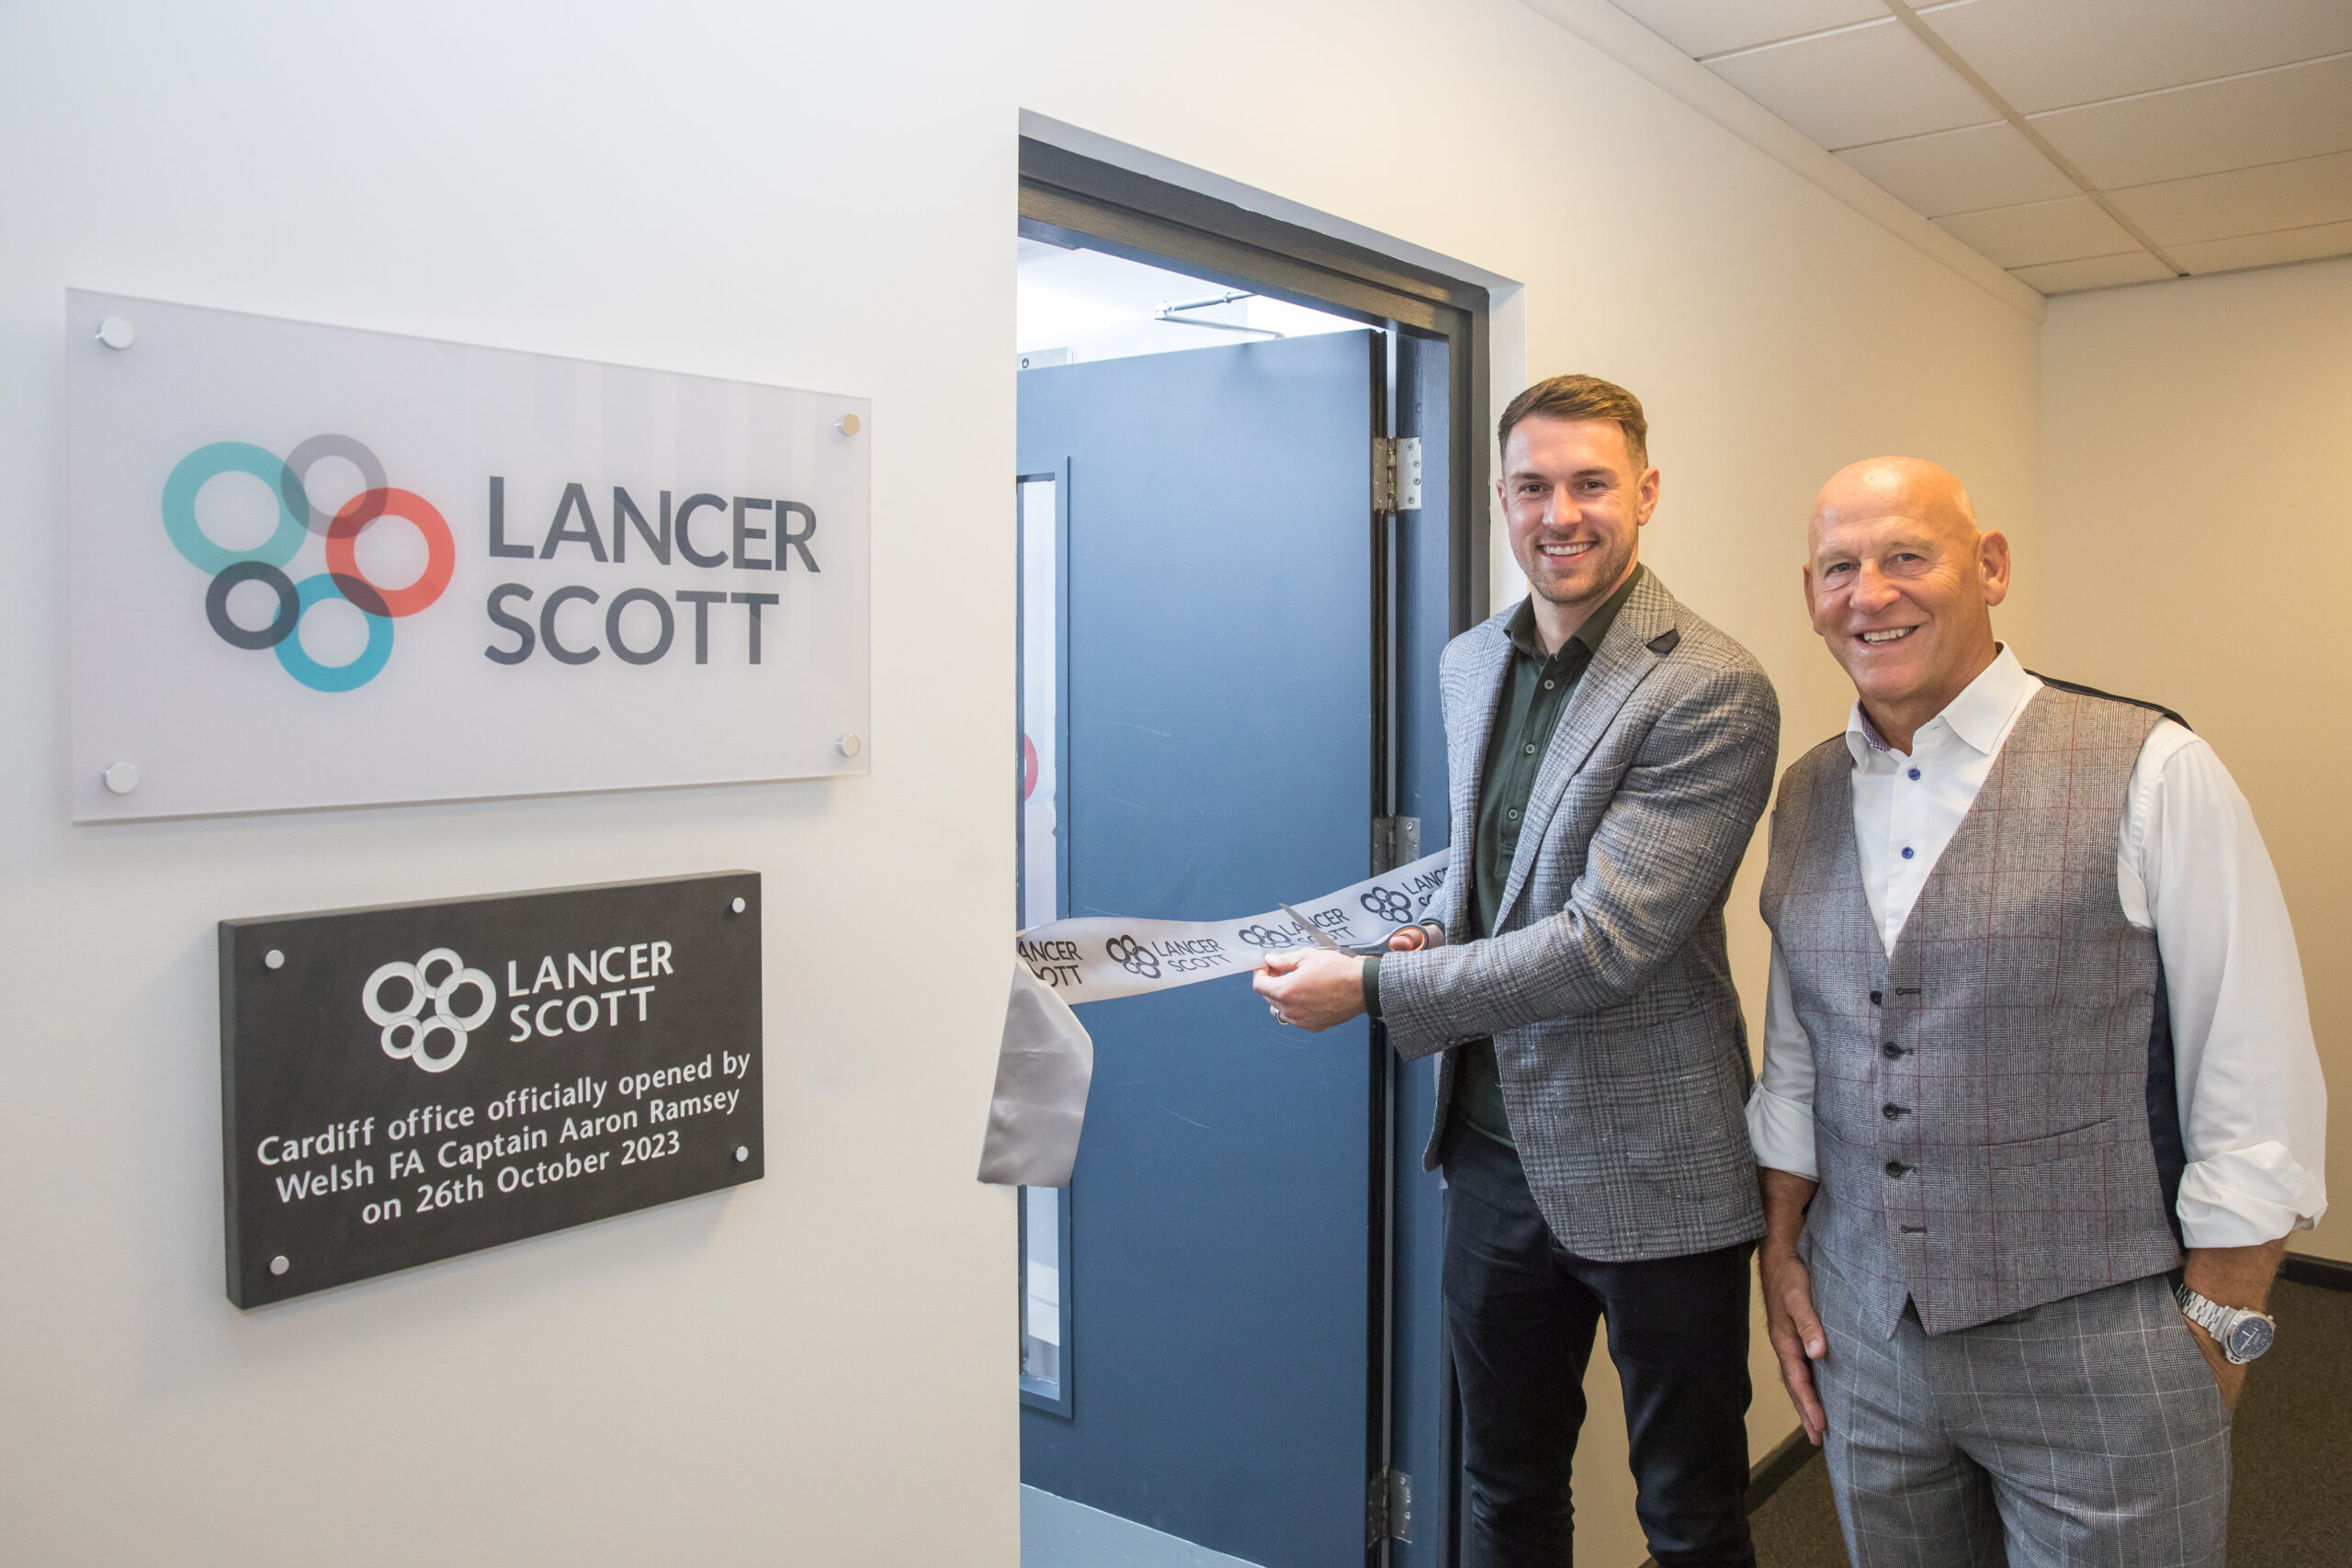 Wales’ Football Captain Aaron Ramsey Opens Lancer Scott’s New Cardiff Office